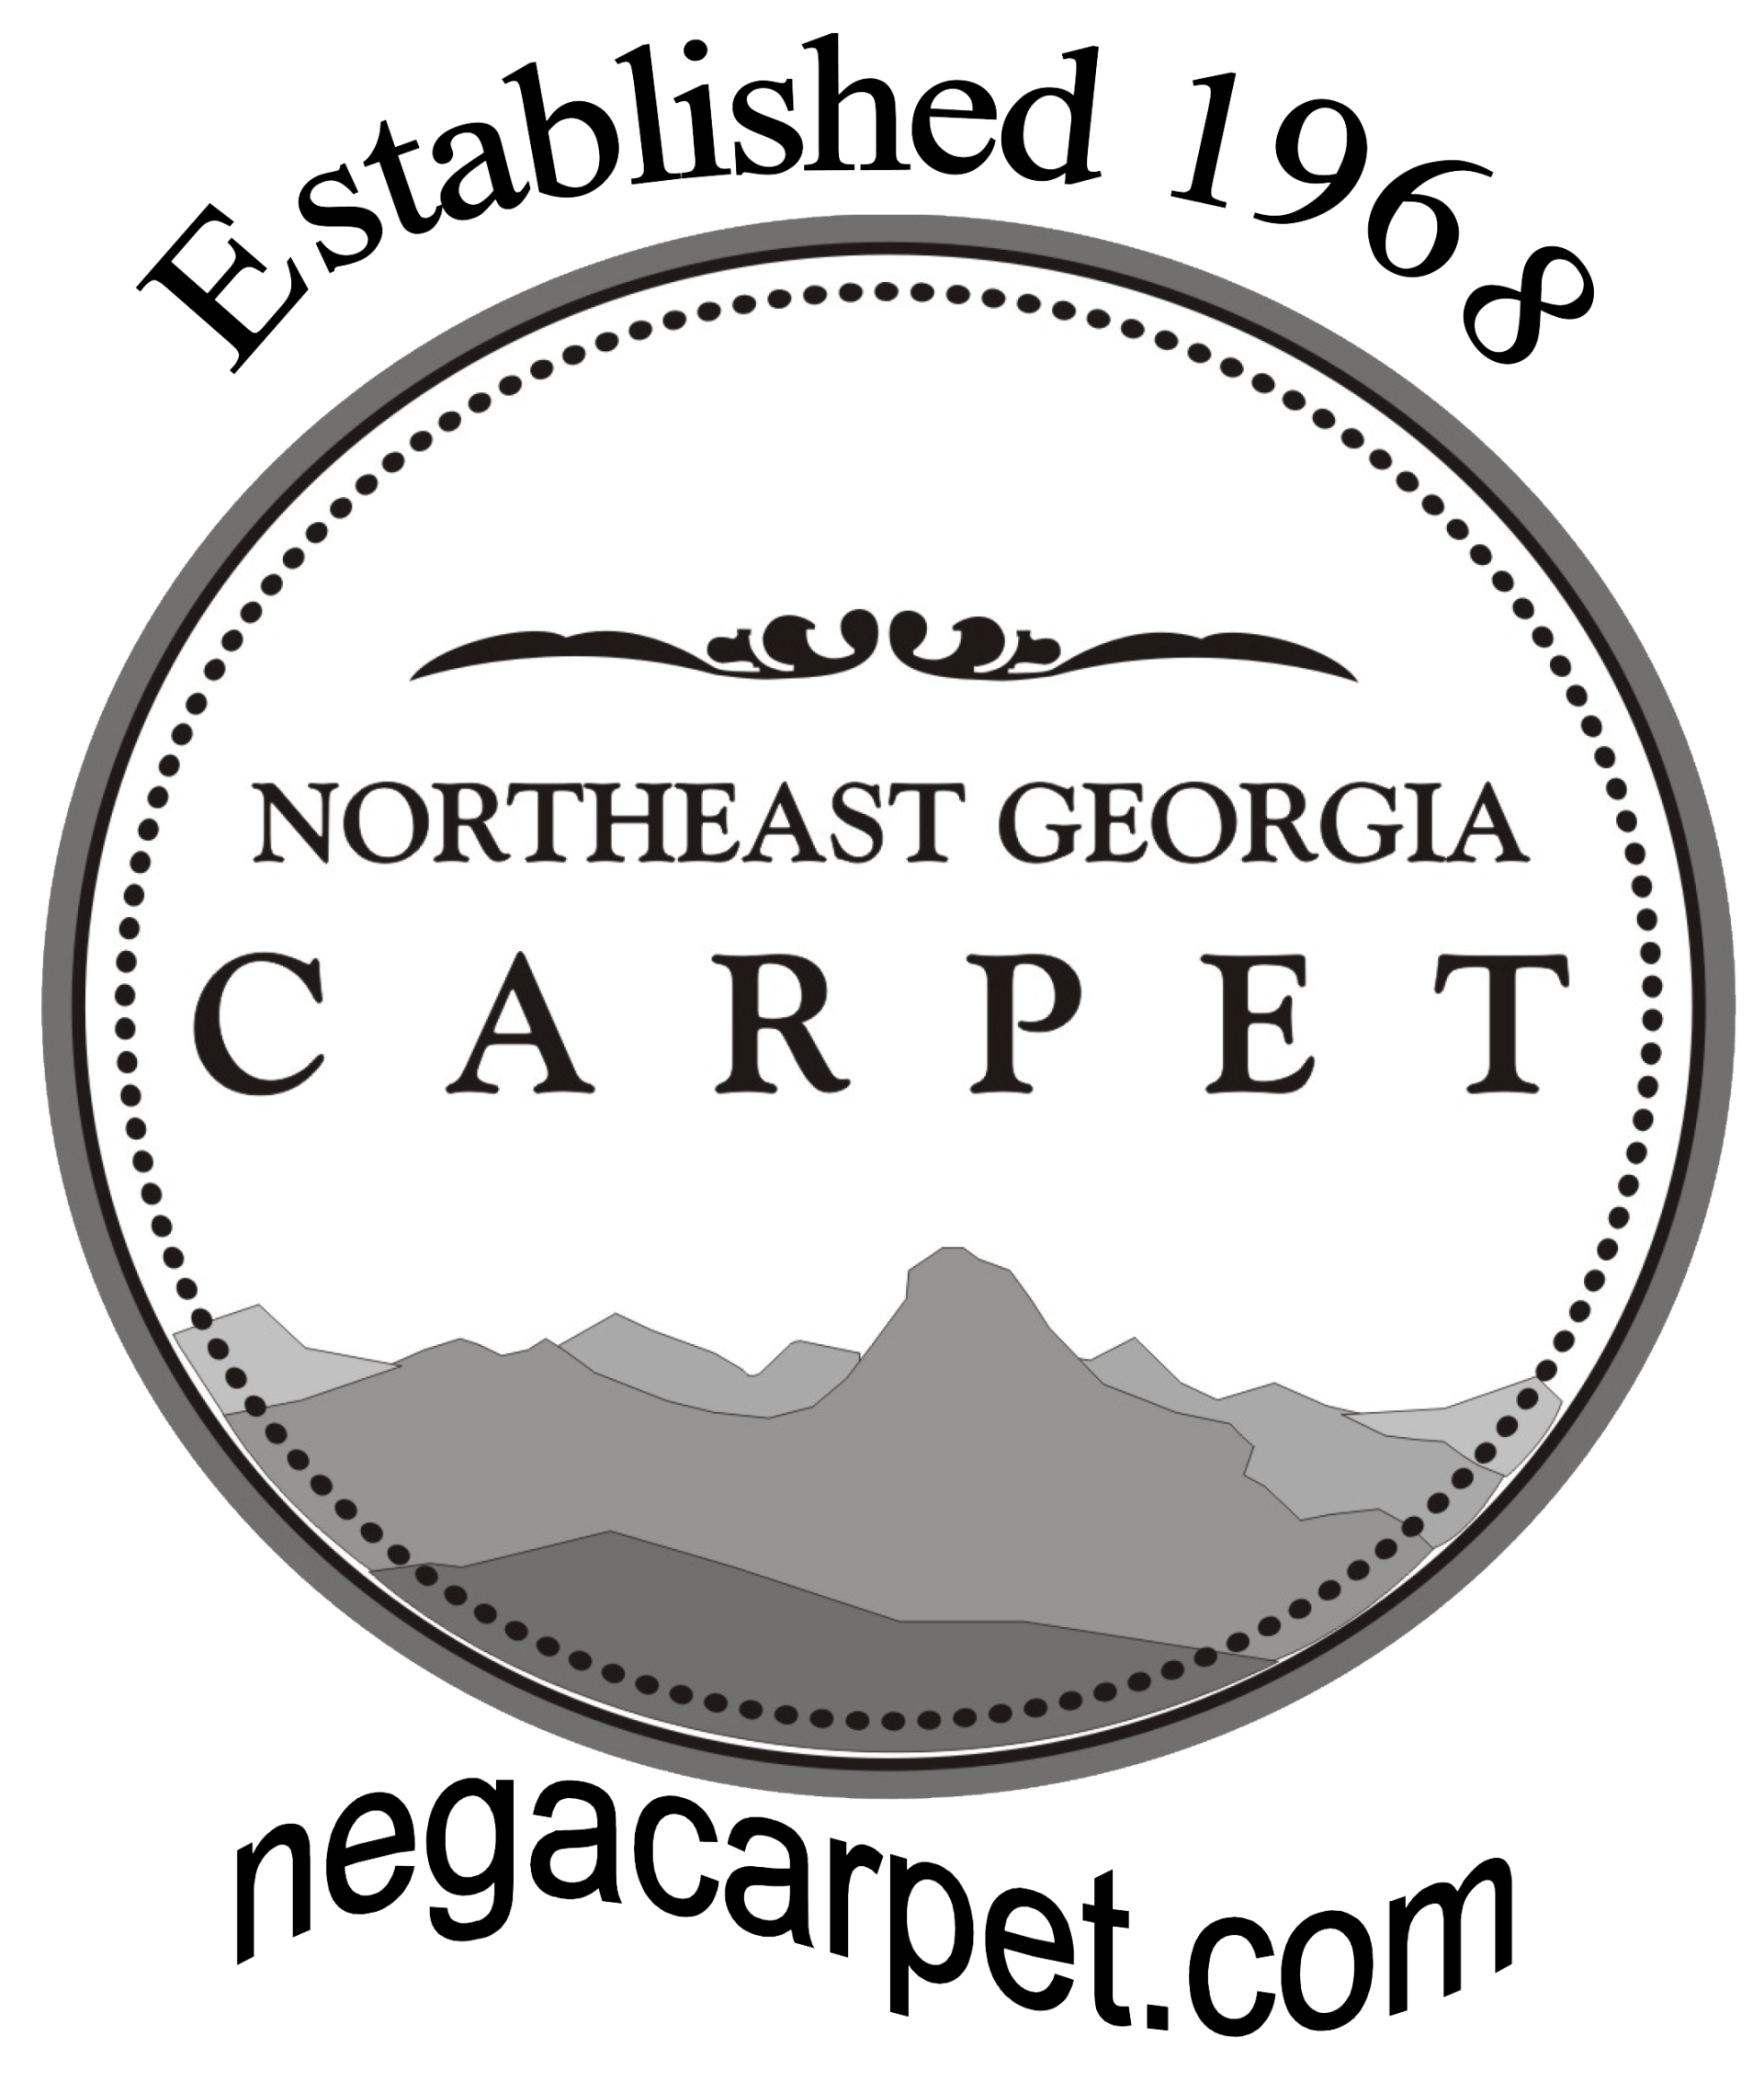 Northeast Georgia Carpet Inc